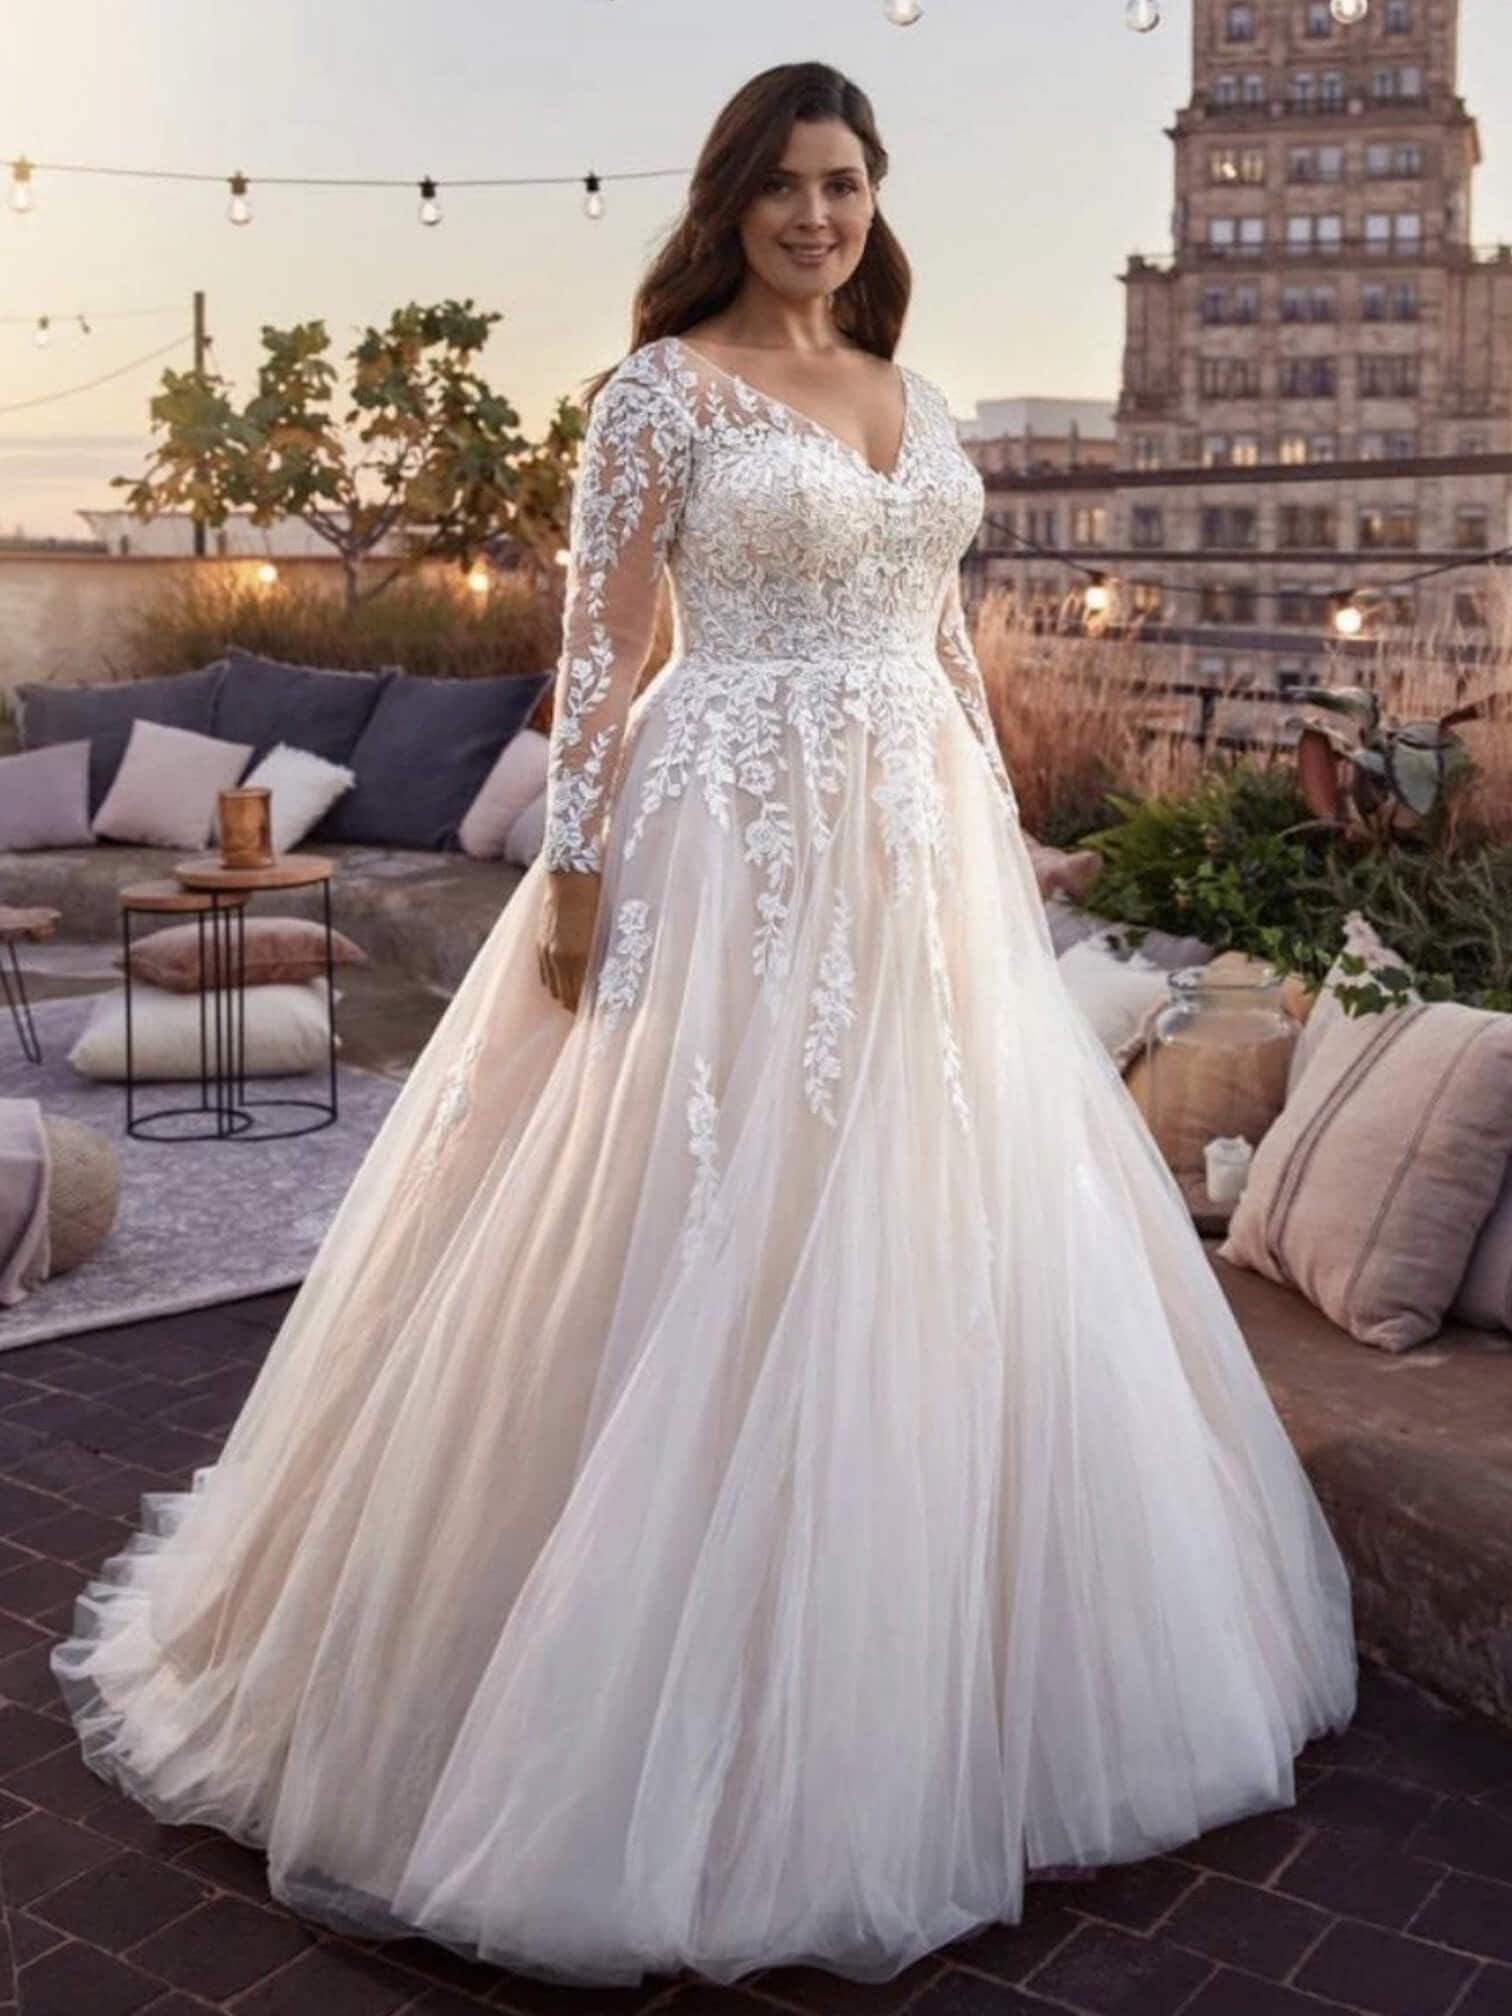 Plus size dresses and bridal wear